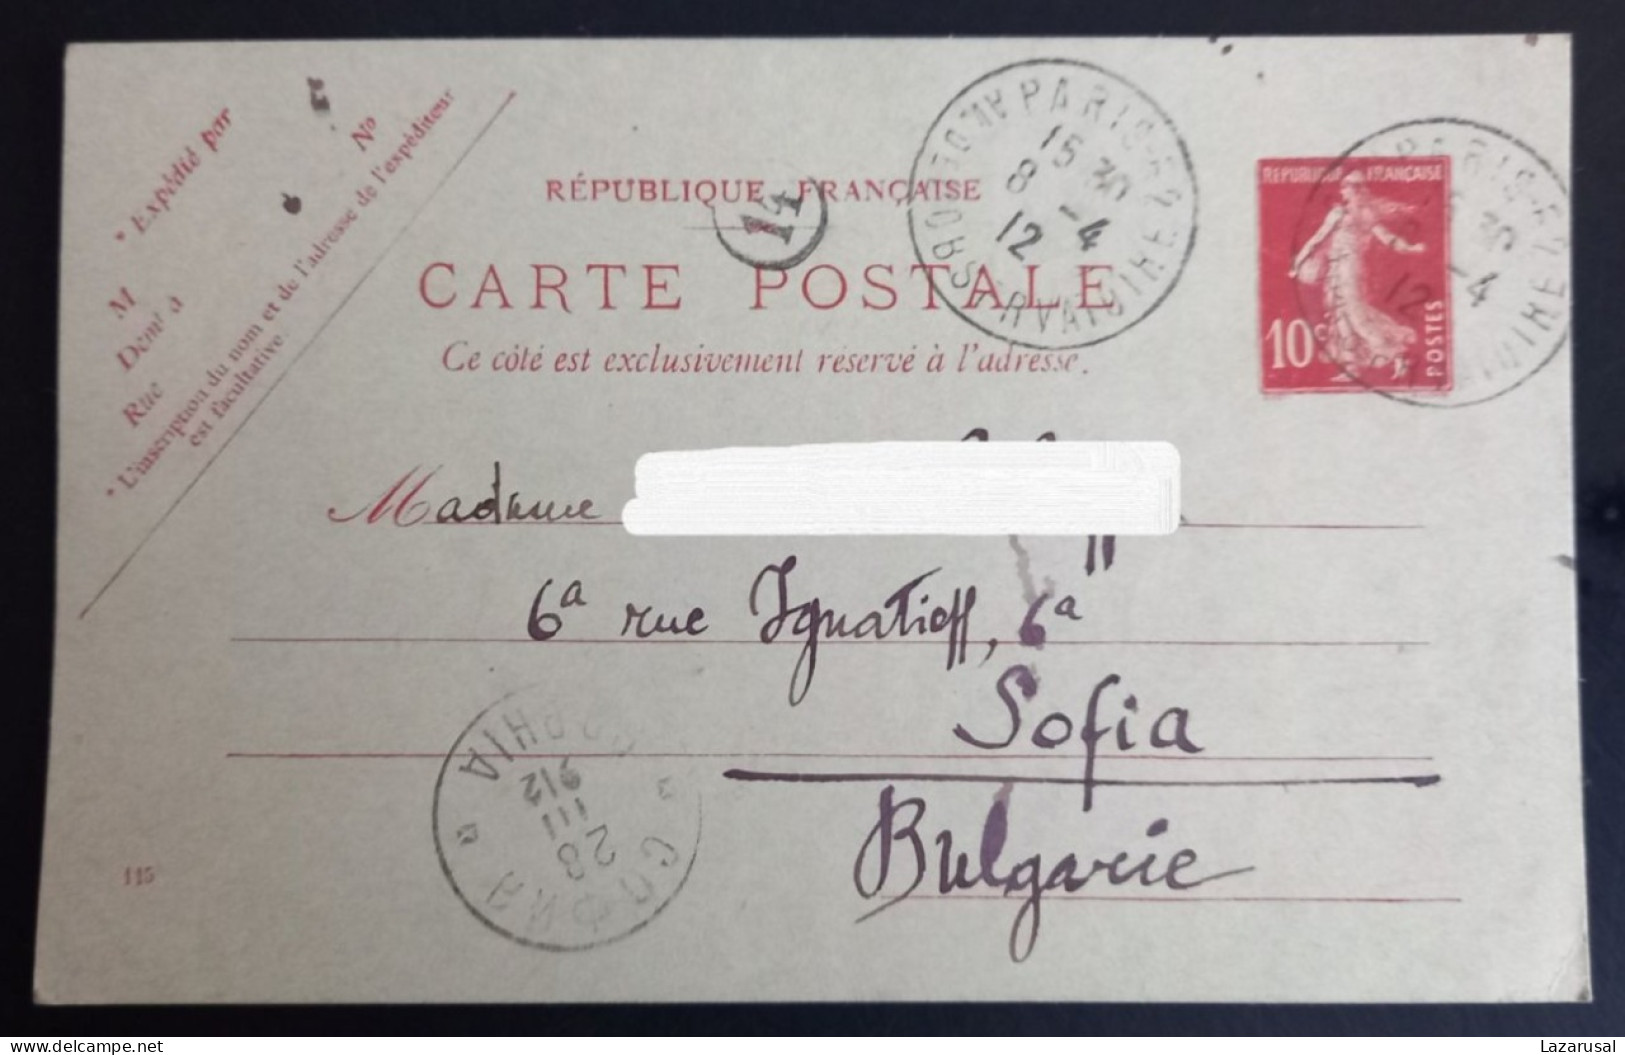 Lot #1  France Stationery Sent To Bulgaria Sofia Balkan War 1912 - Kartenbriefe